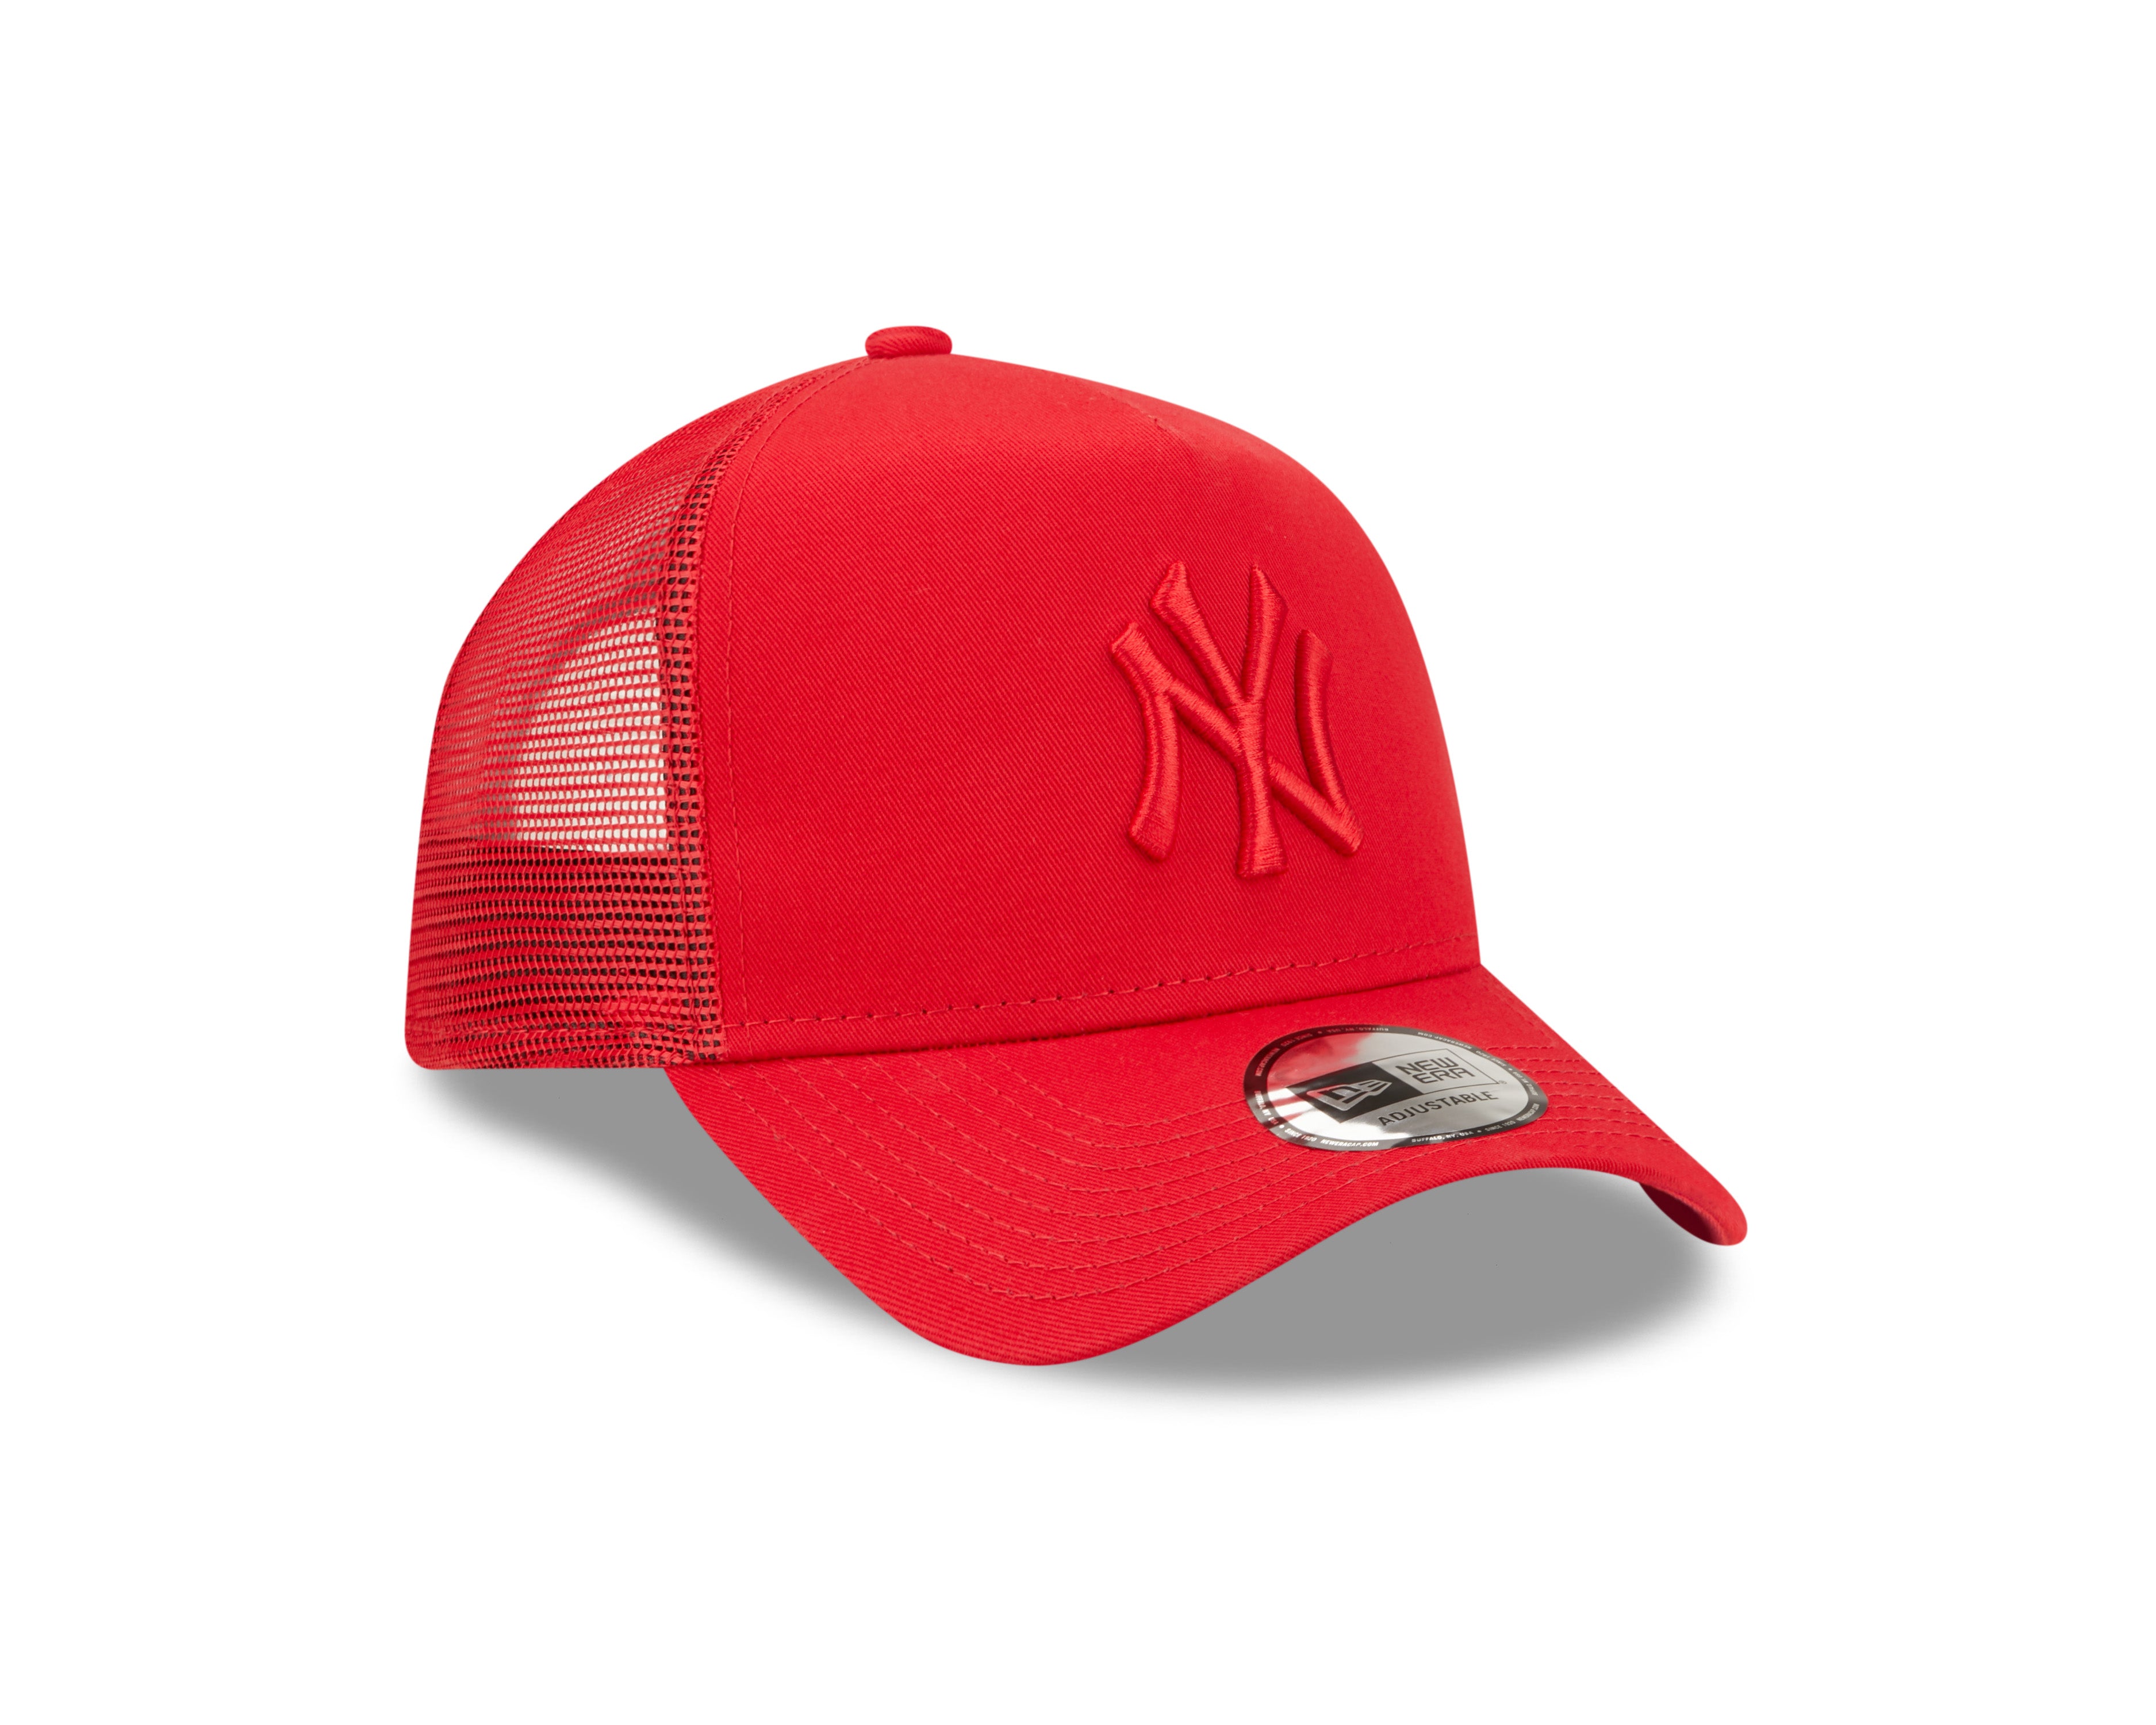 Tonal Mesh Trucker Cap New York Yankees - Scarlet/Scarlet - Headz Up 